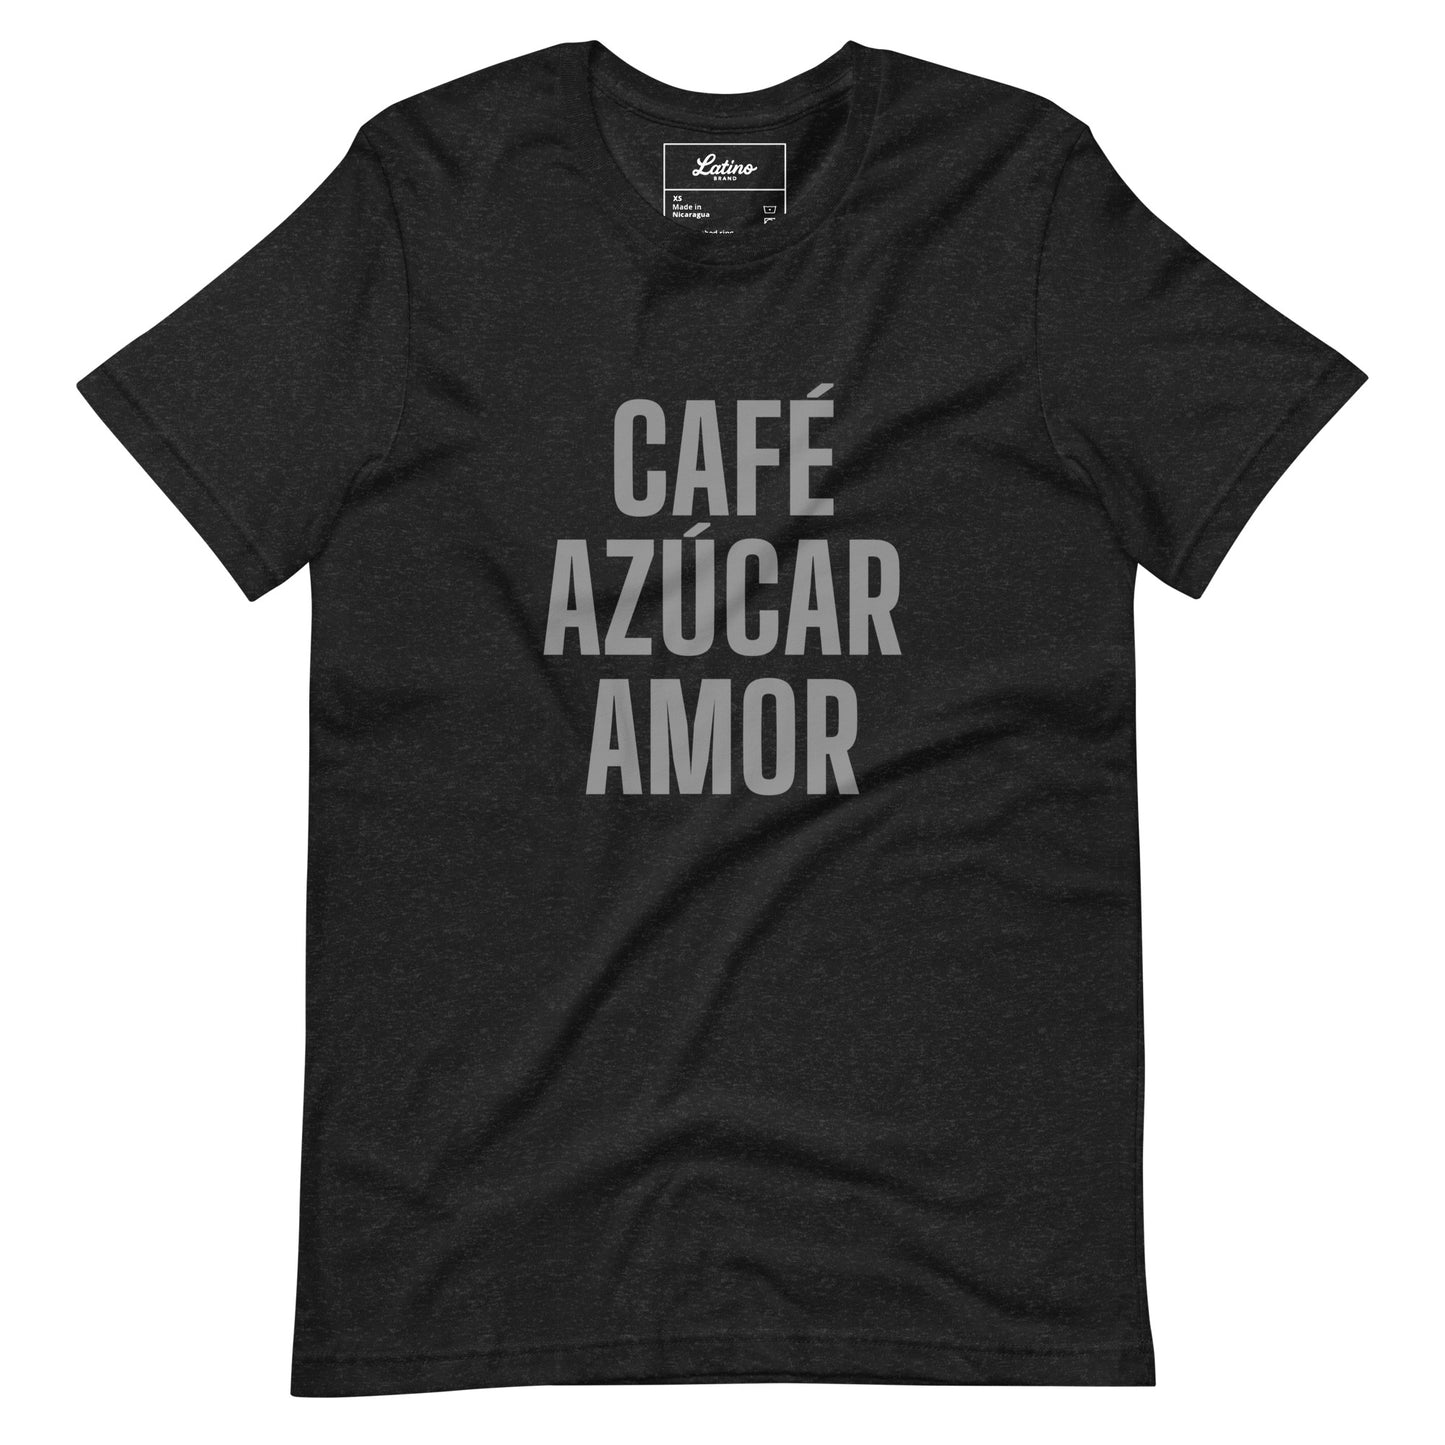 Cafe, Azucar, Amor T-shirt